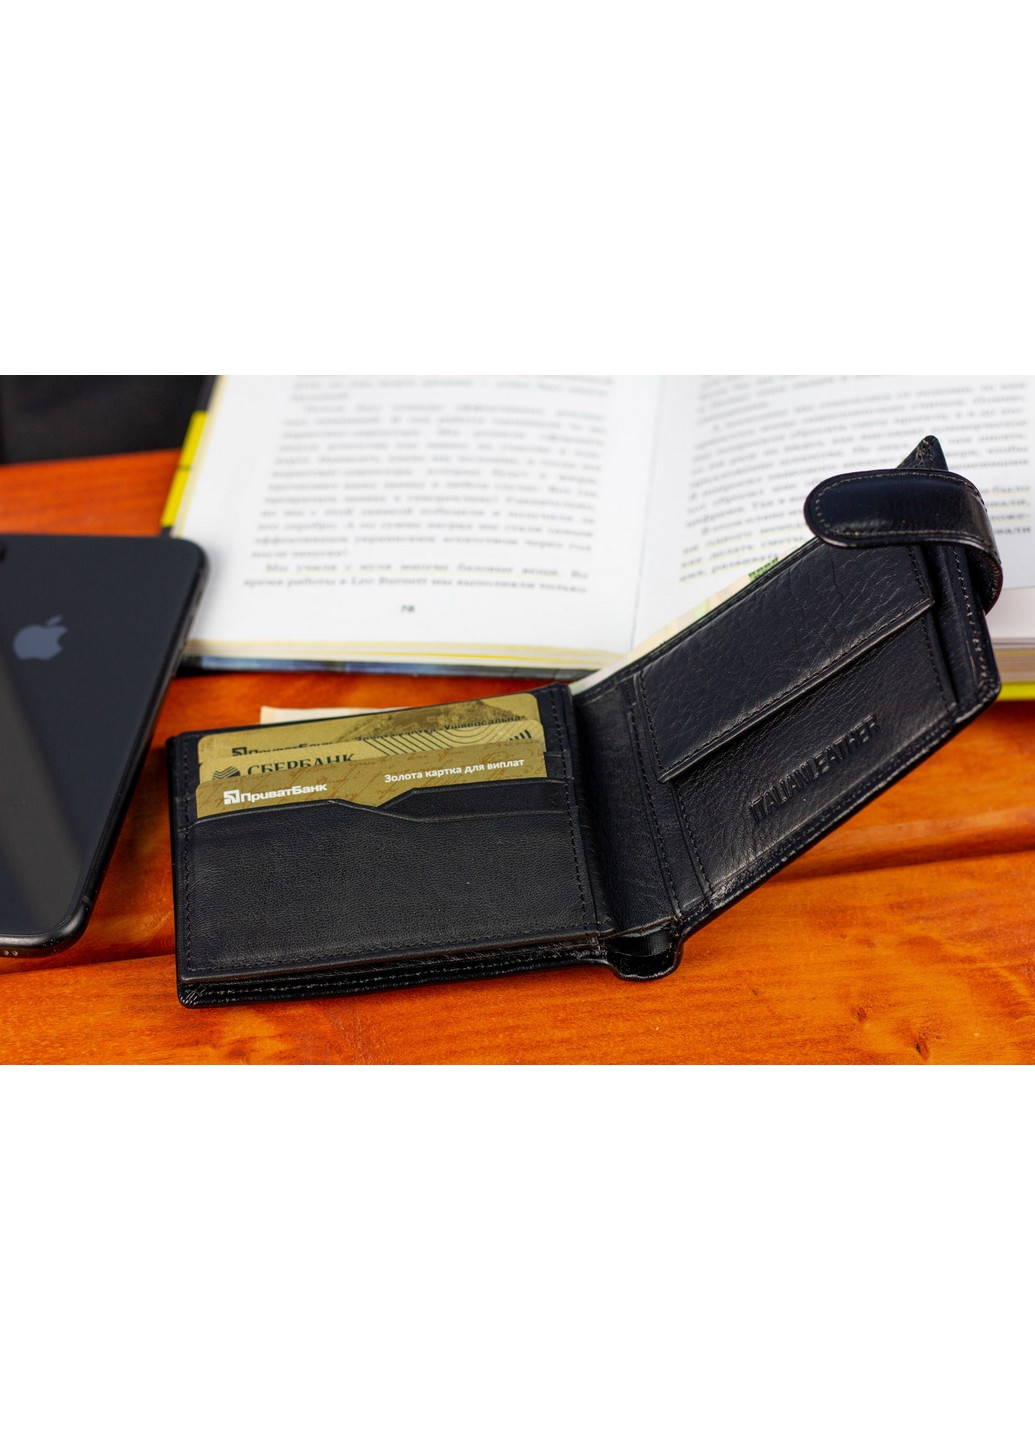 Кожаное мужское портмоне ST Leather Accessories (277693291)